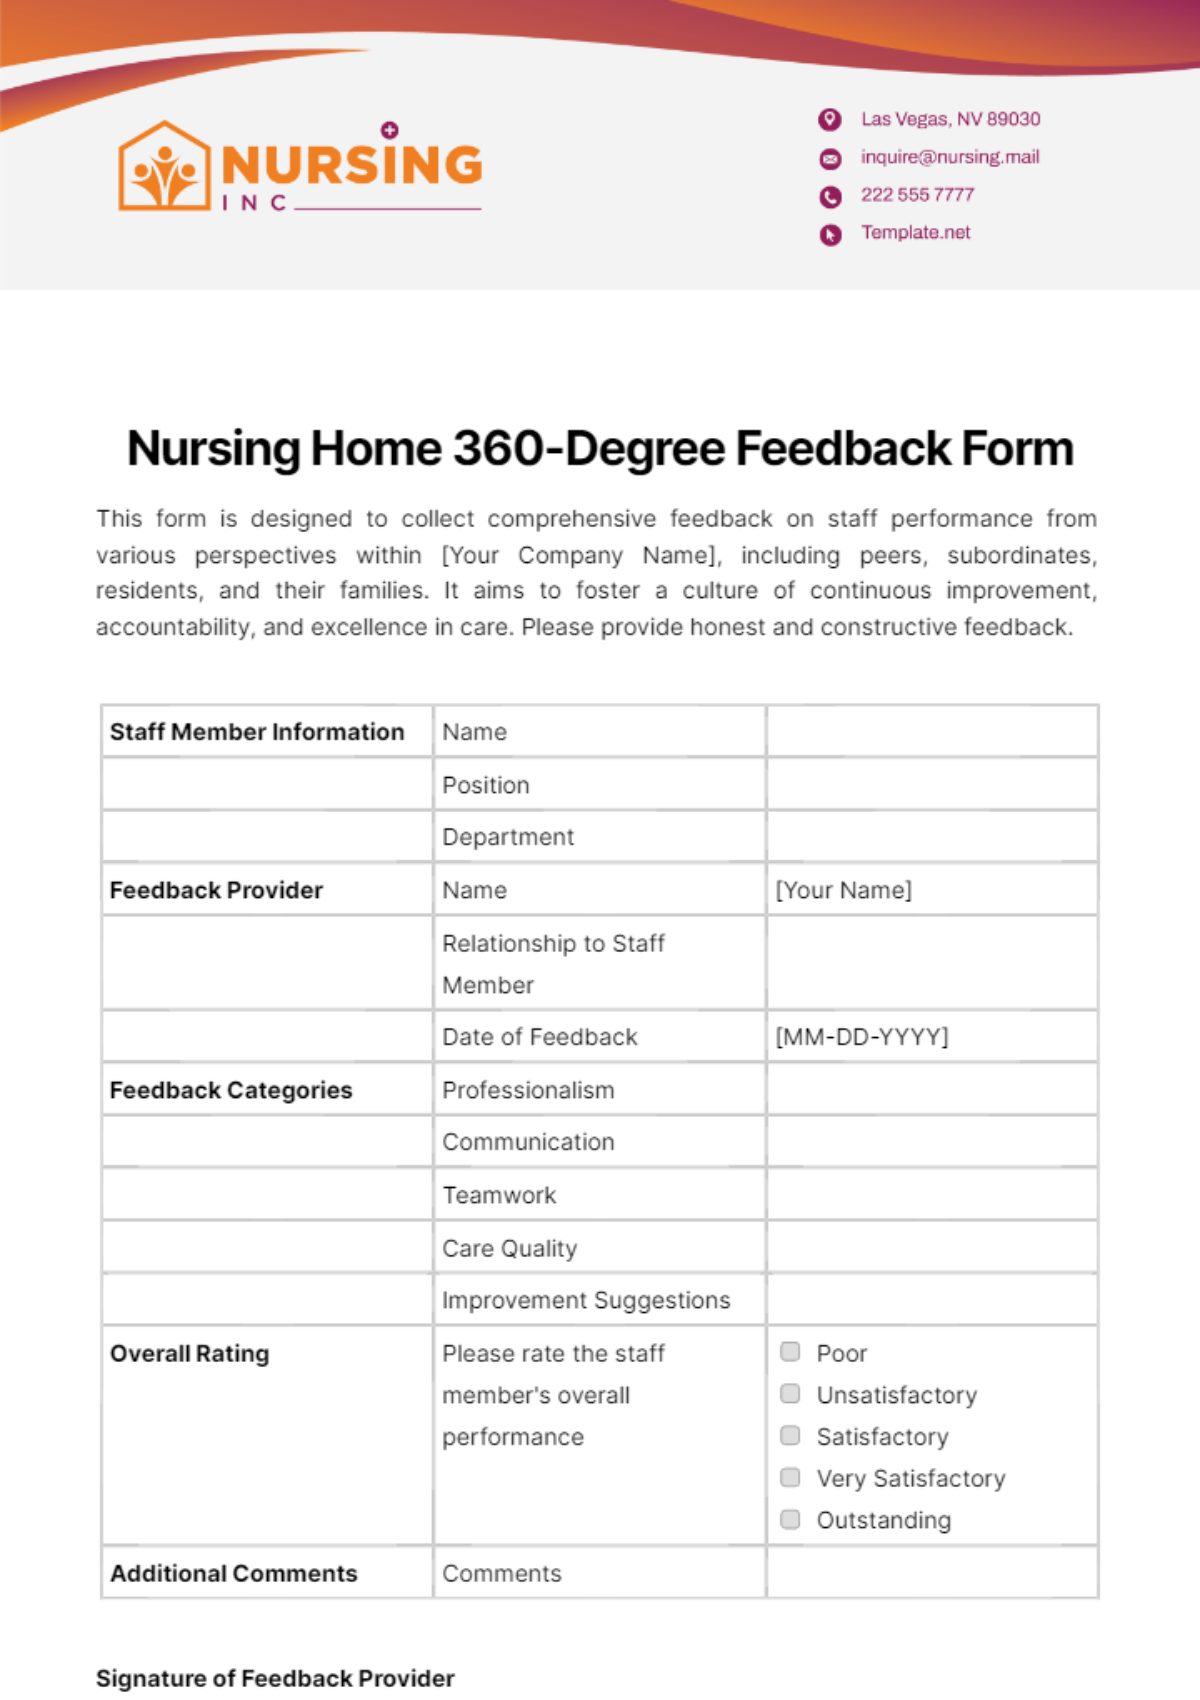 Free Nursing Home 360-Degree Feedback Form Template